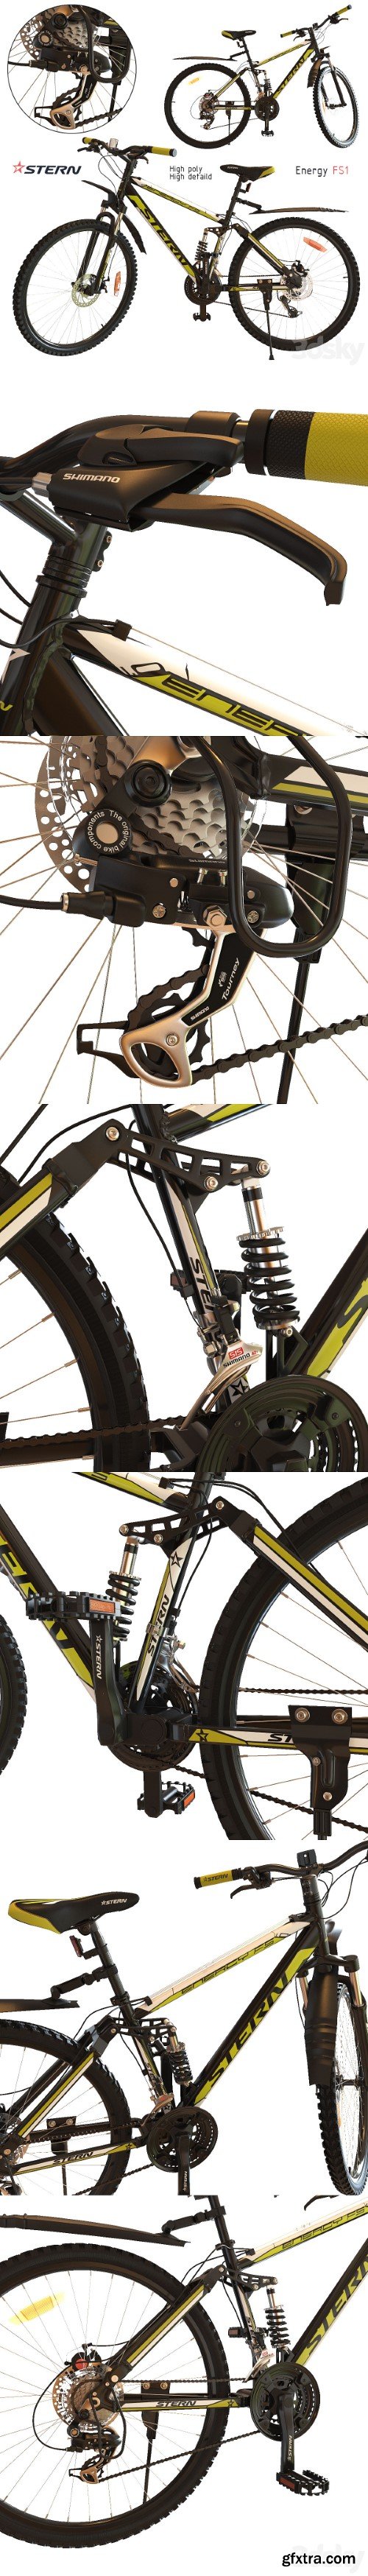 Pro 3DSky - Bicycle Stern Energy FS1